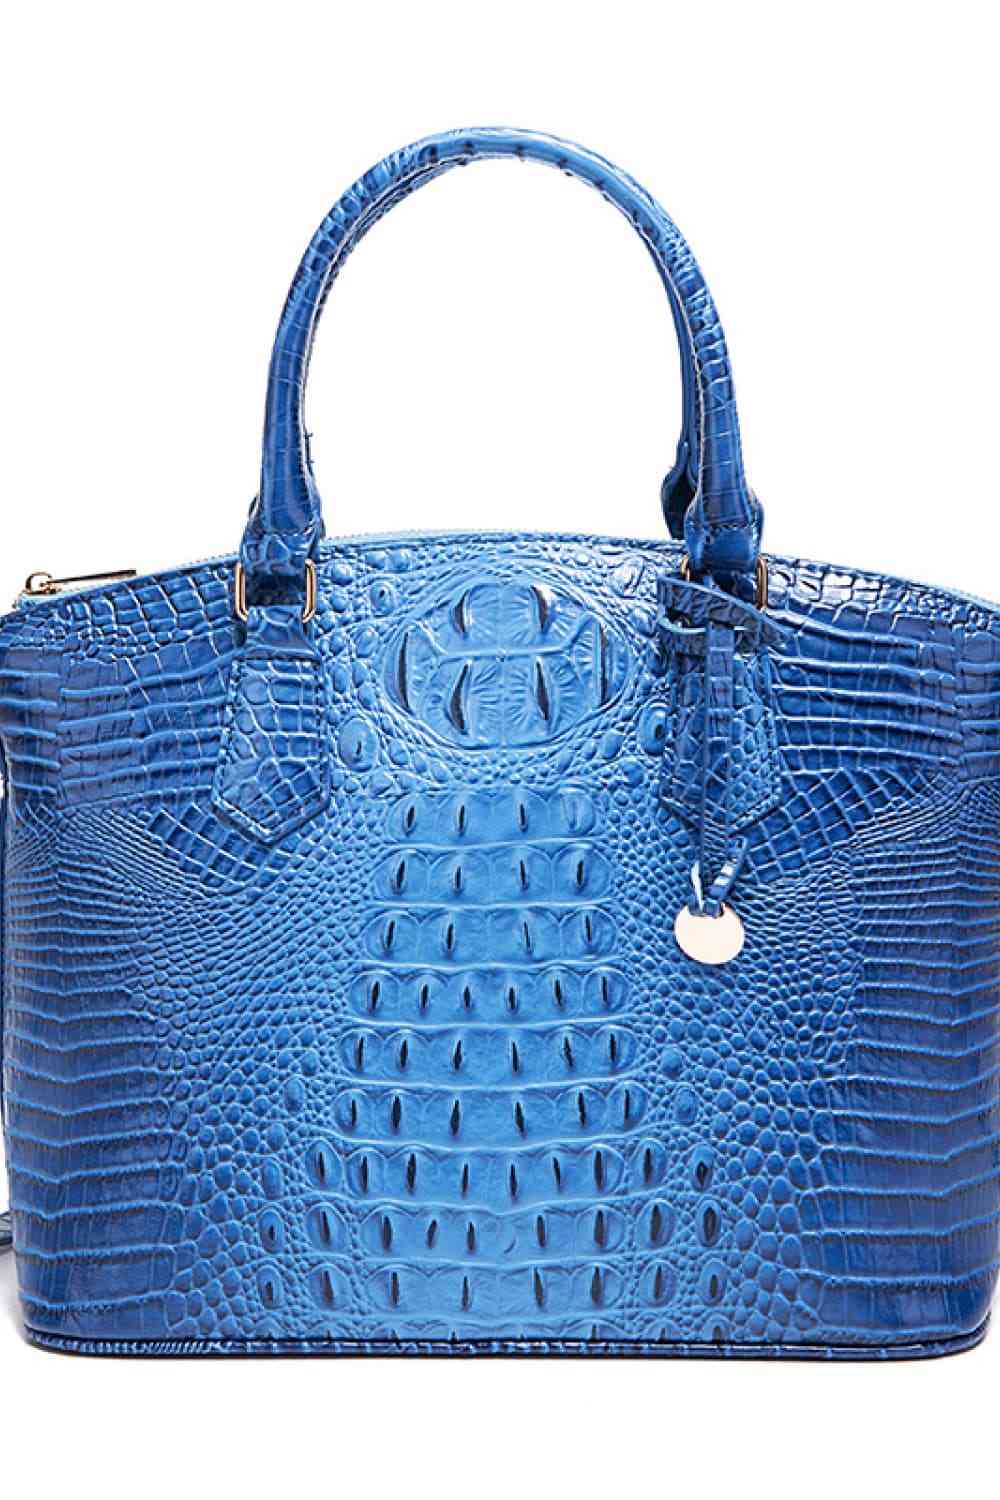 TEEK - Style Scheduler Handbag BAG TEEK Trend Sky Blue  